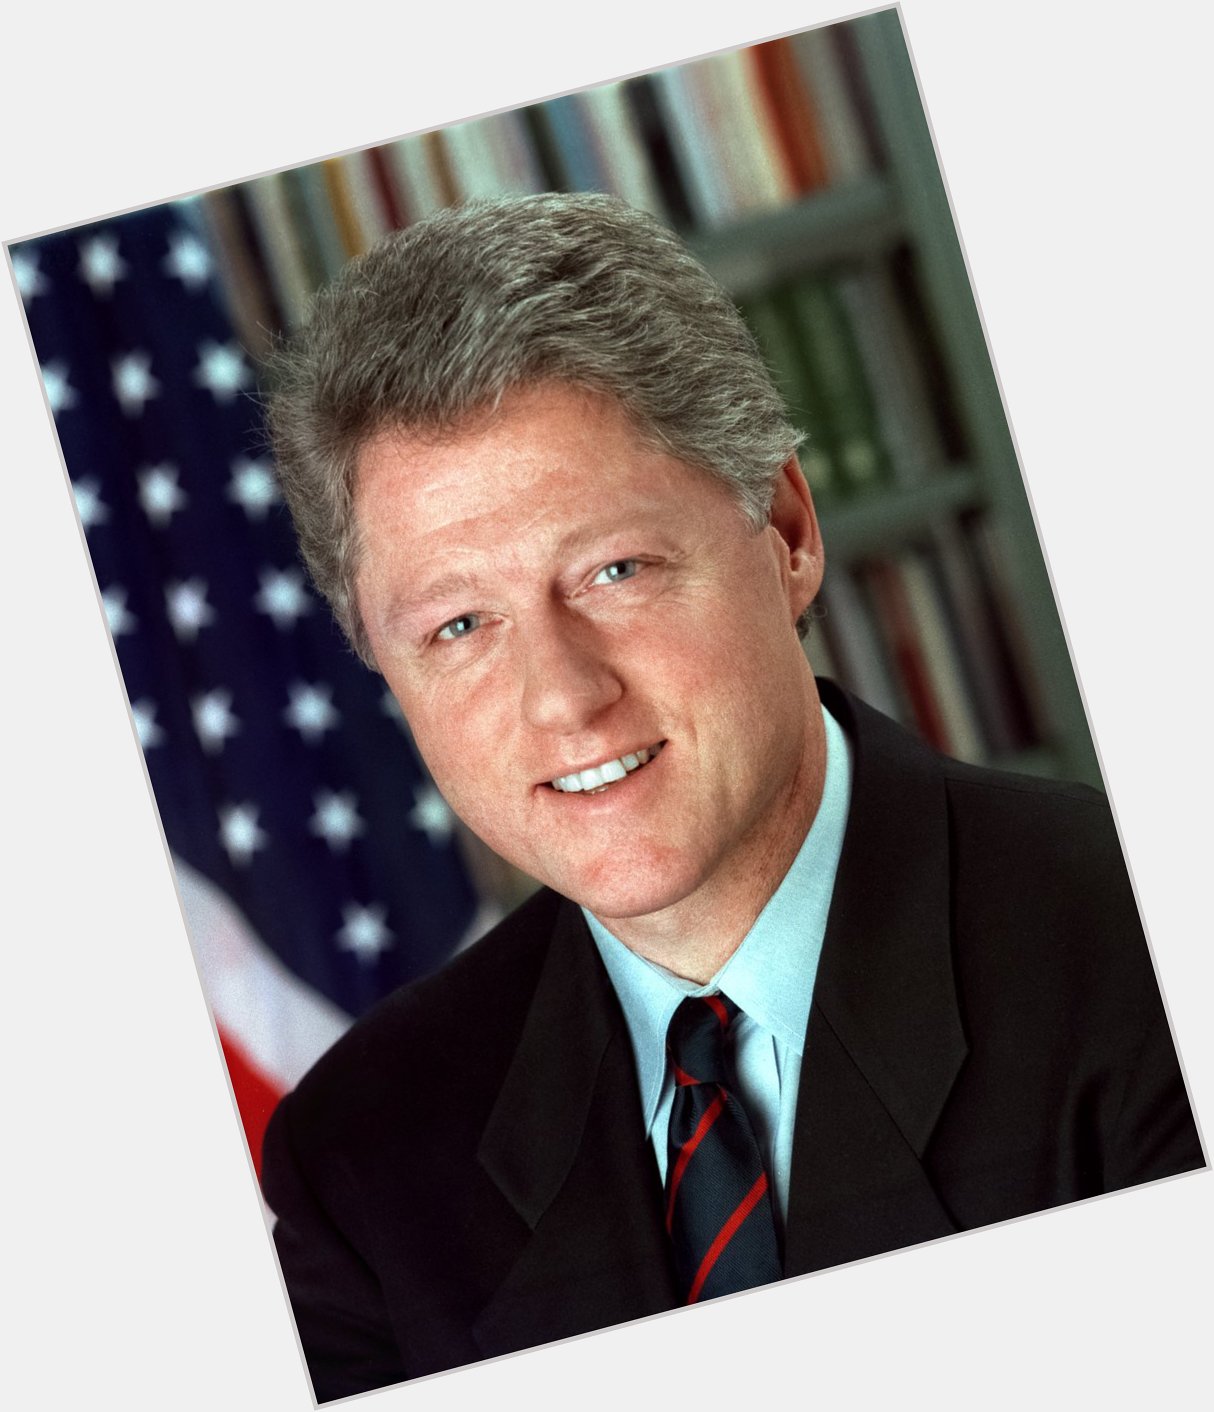 Happy 71st birthday to former President Bill Clinton! 